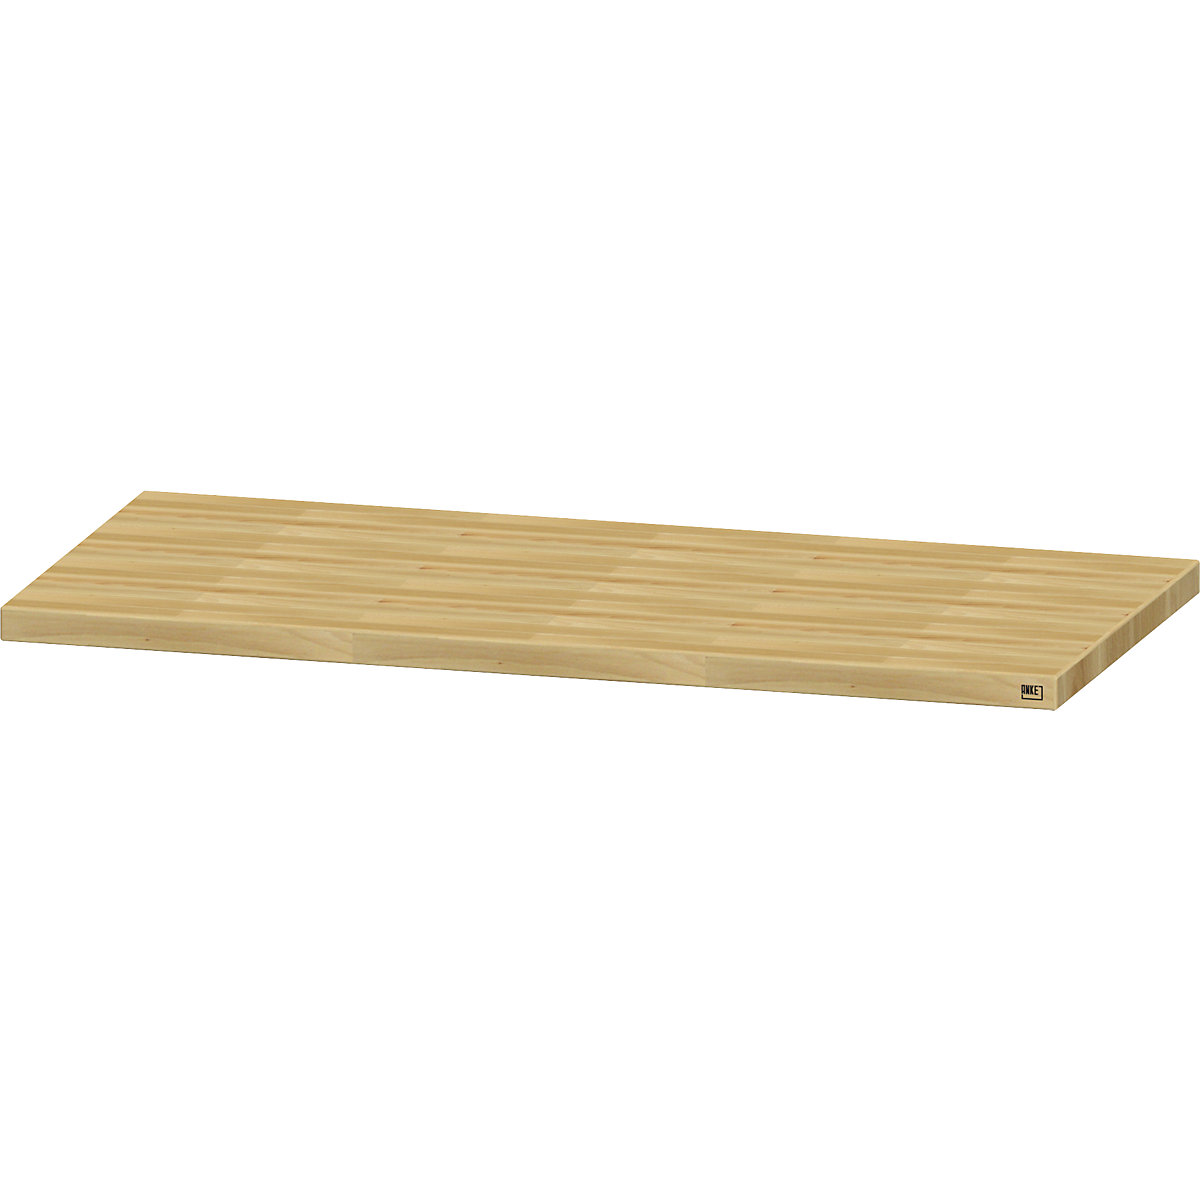 Worktop for workbench – ANKE, solid copper beech worktop, width 1500 mm, thickness 50 mm-6